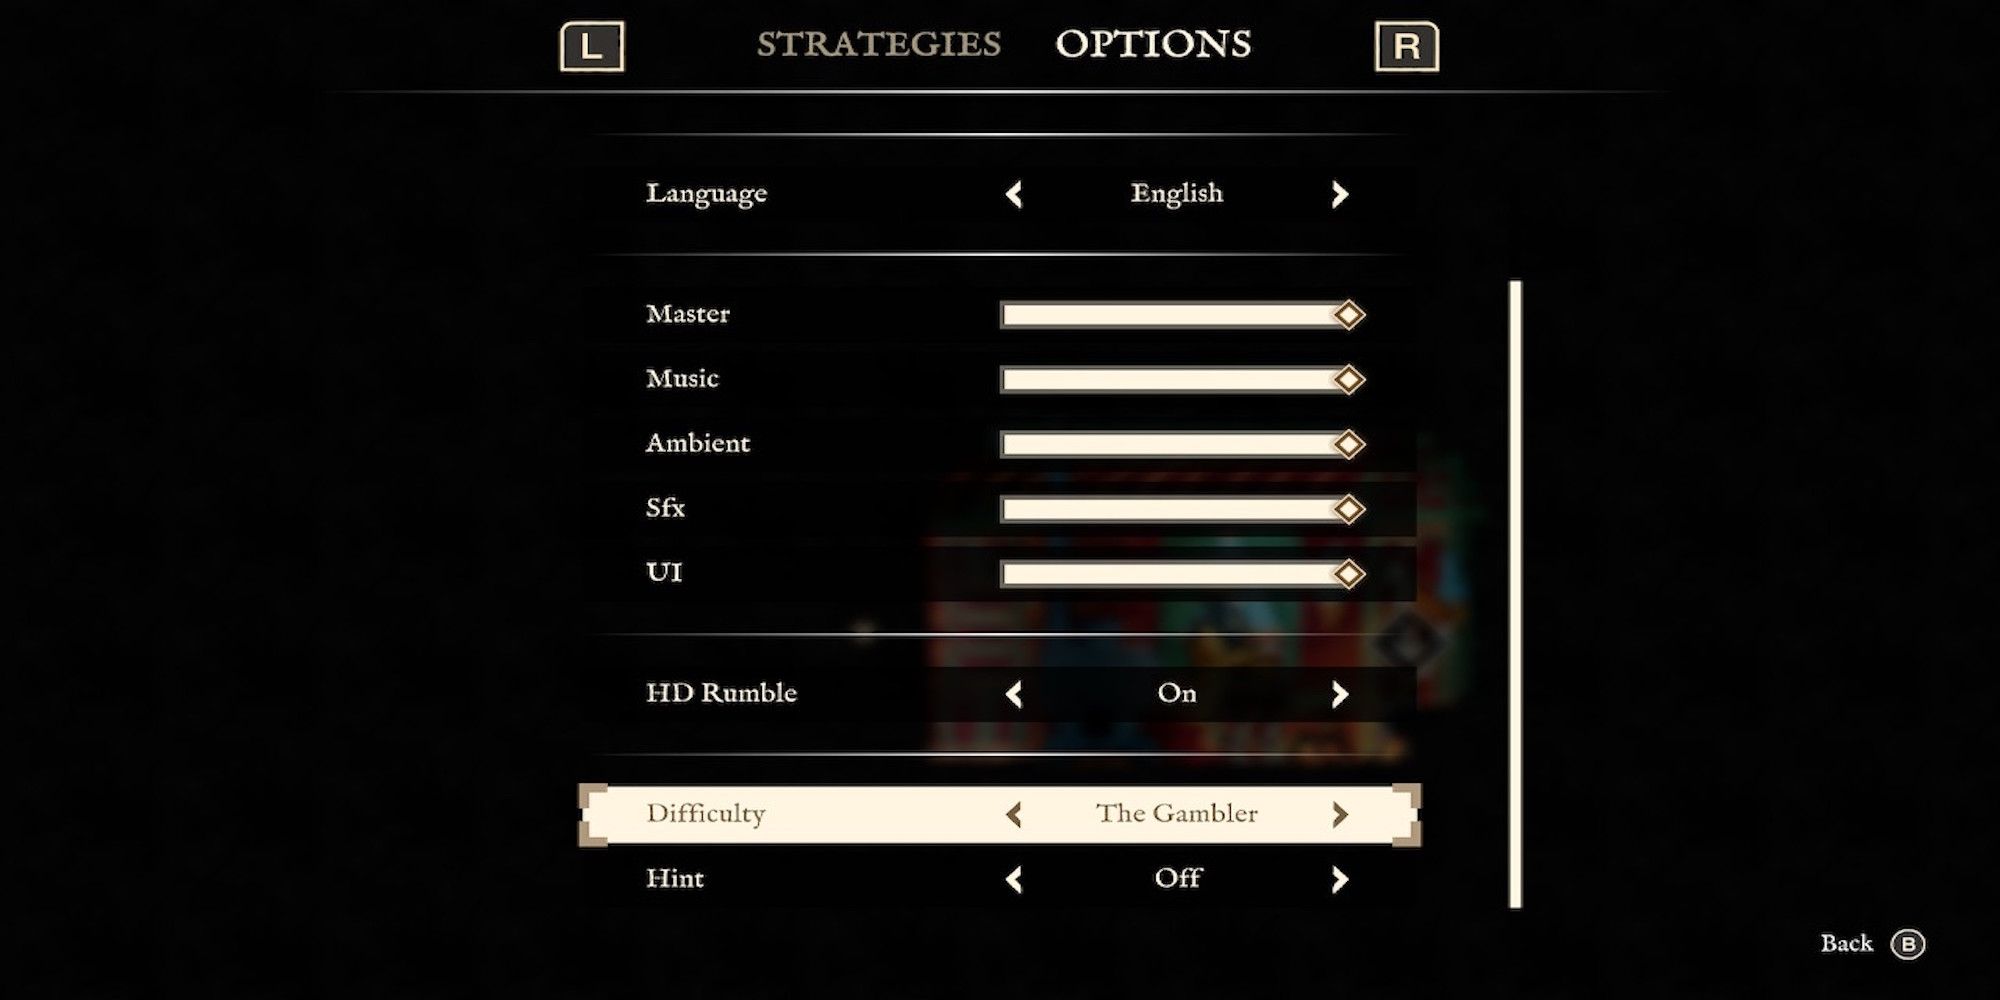 The options menu in Card Shark